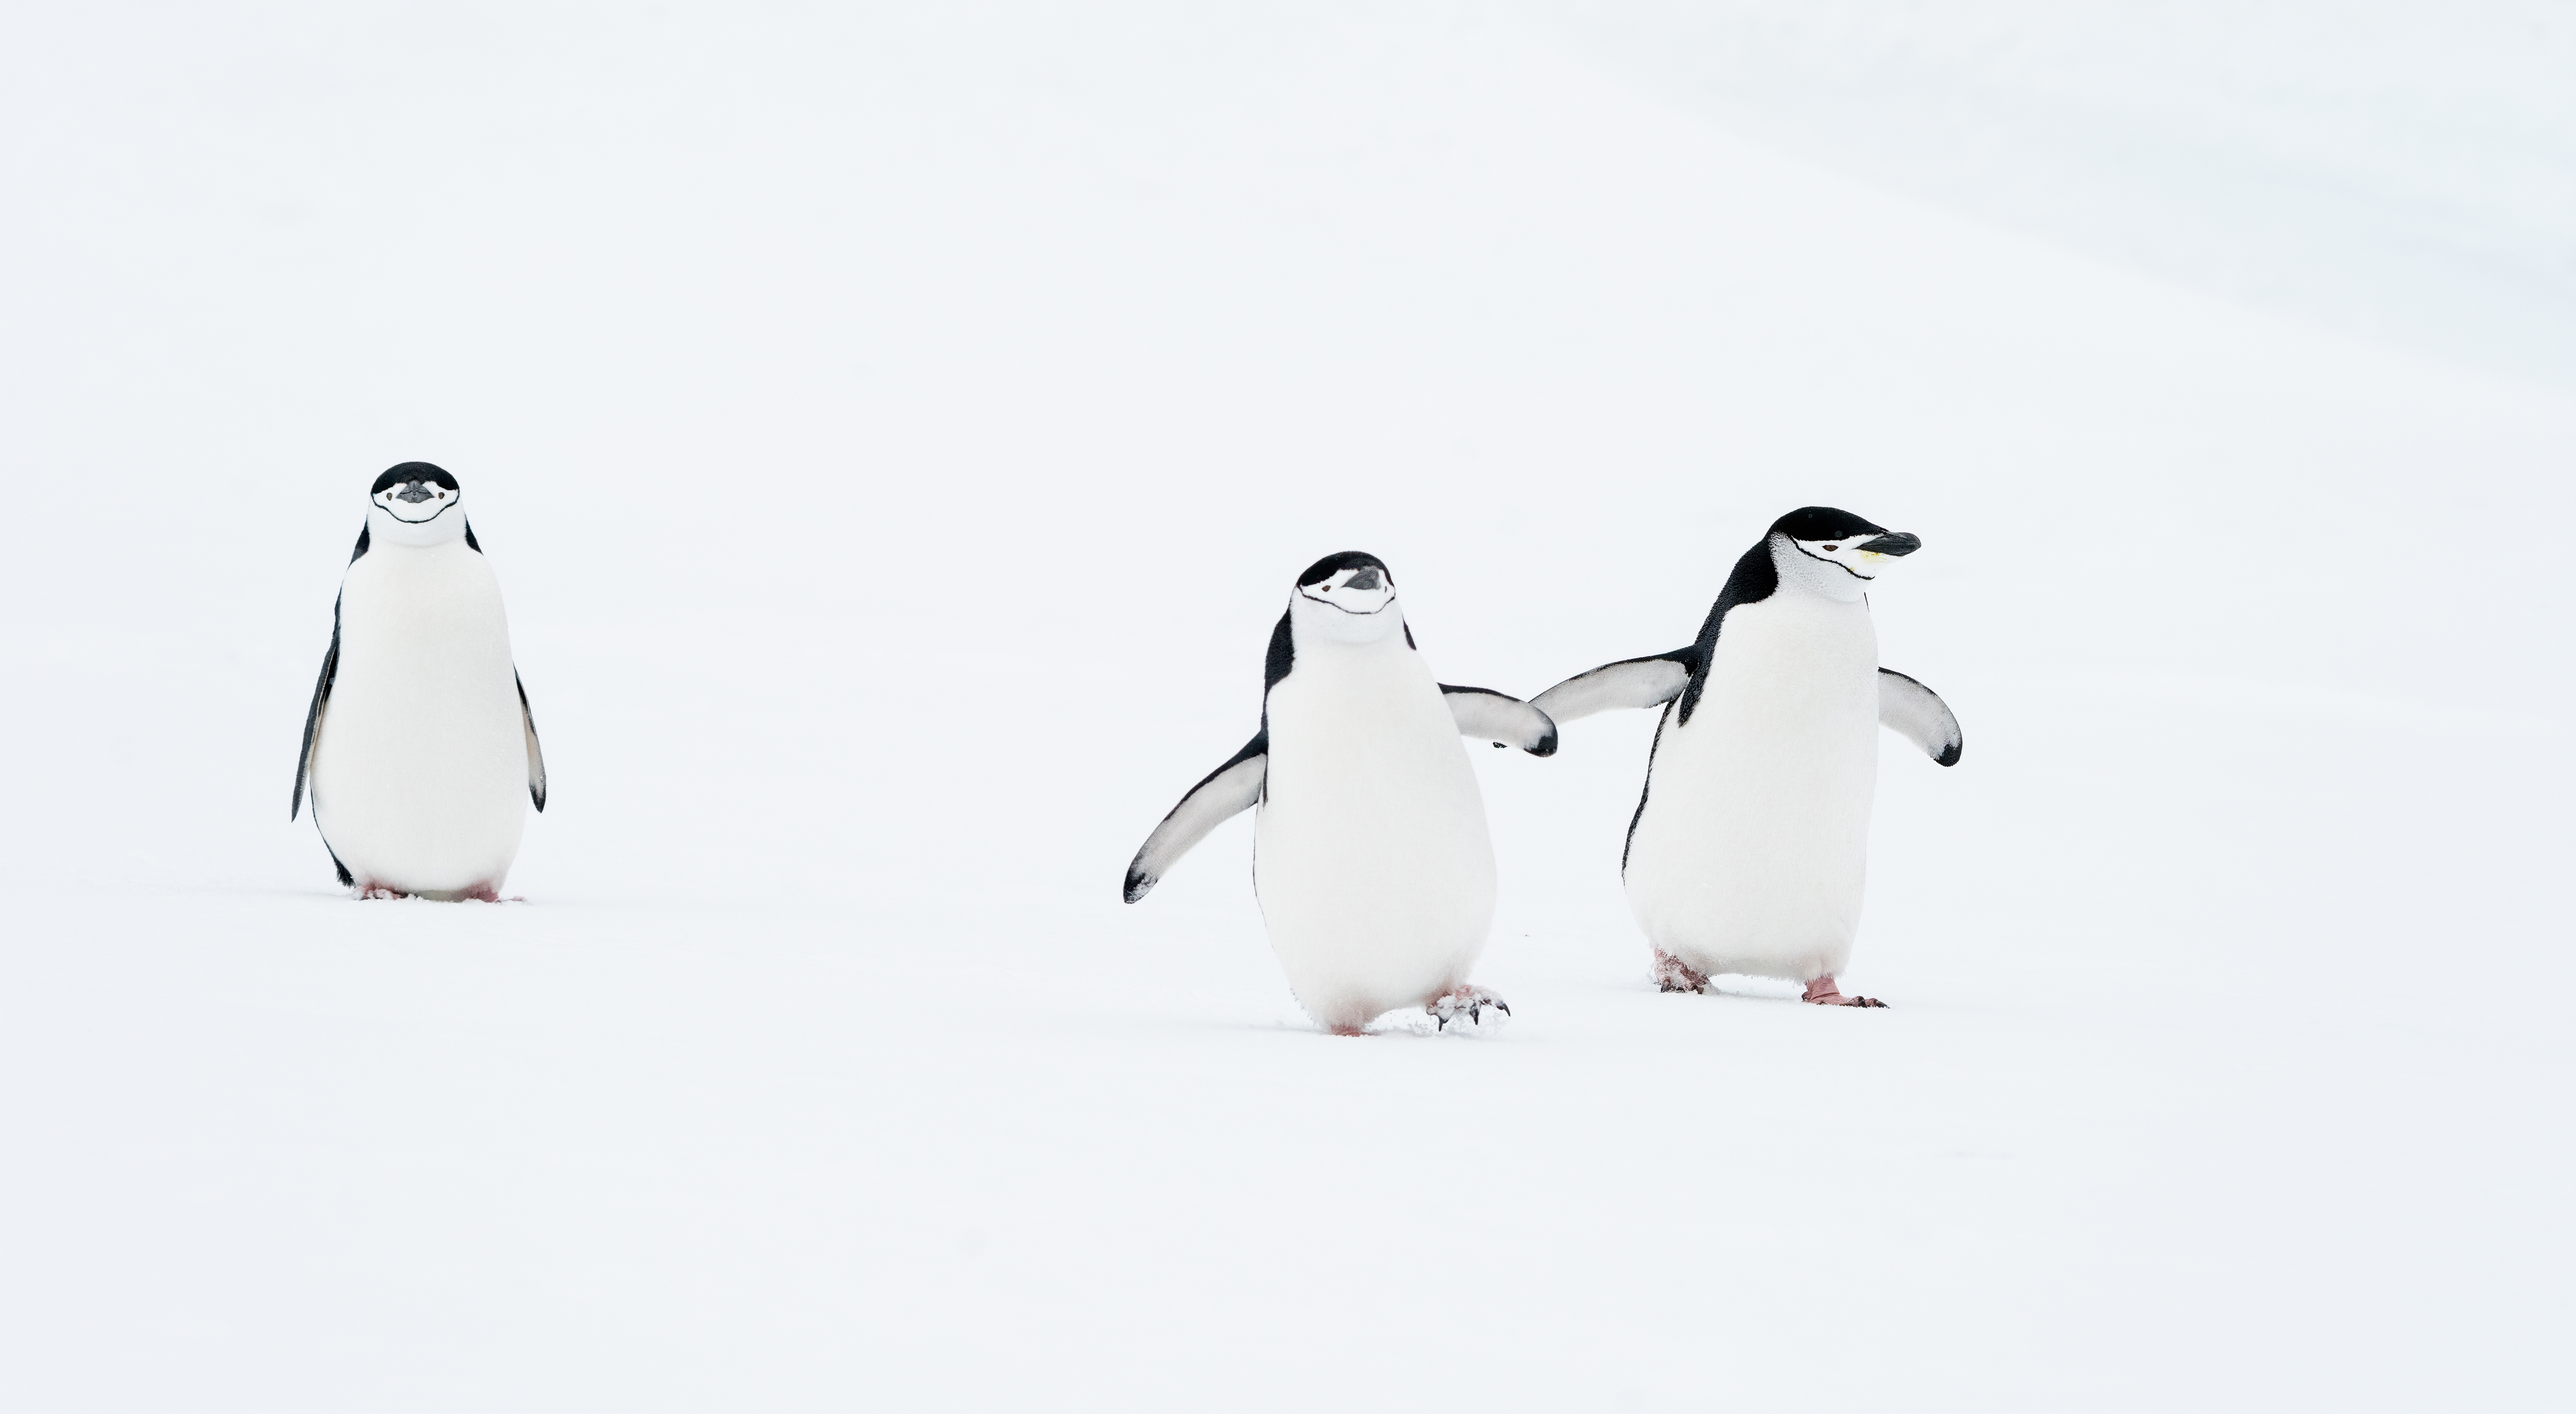 Dua penguin difoto bersama, meninggalkan penguin sendirian.